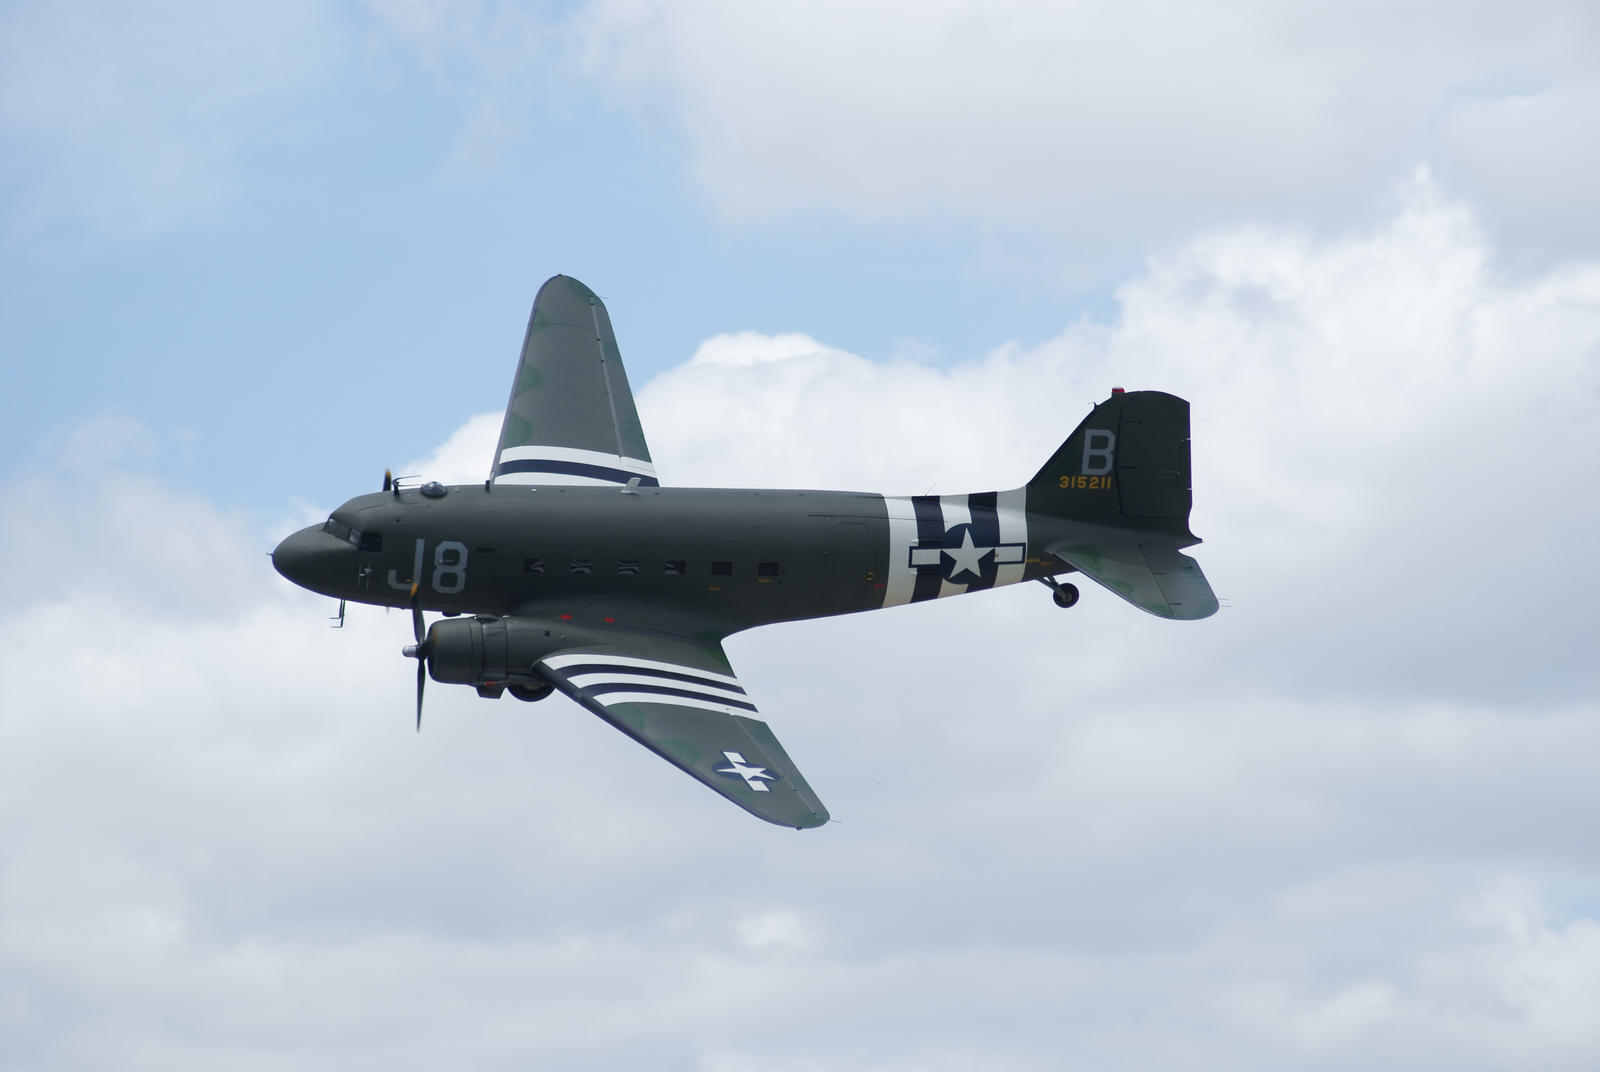 C-47A N1944A Little better angle IMHO